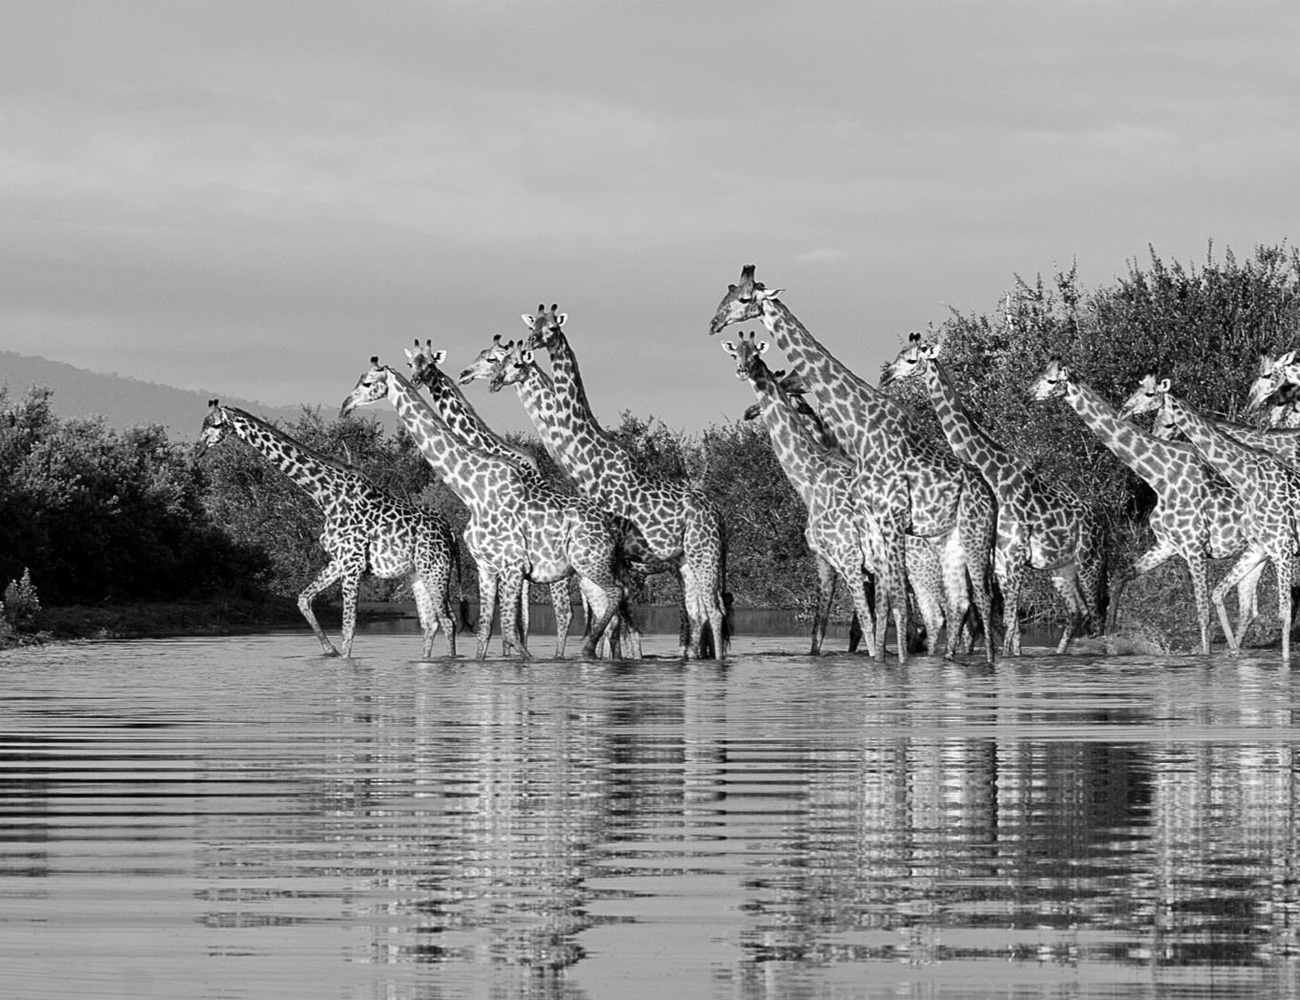 Animals at Selous Game Reserve, Tanzania